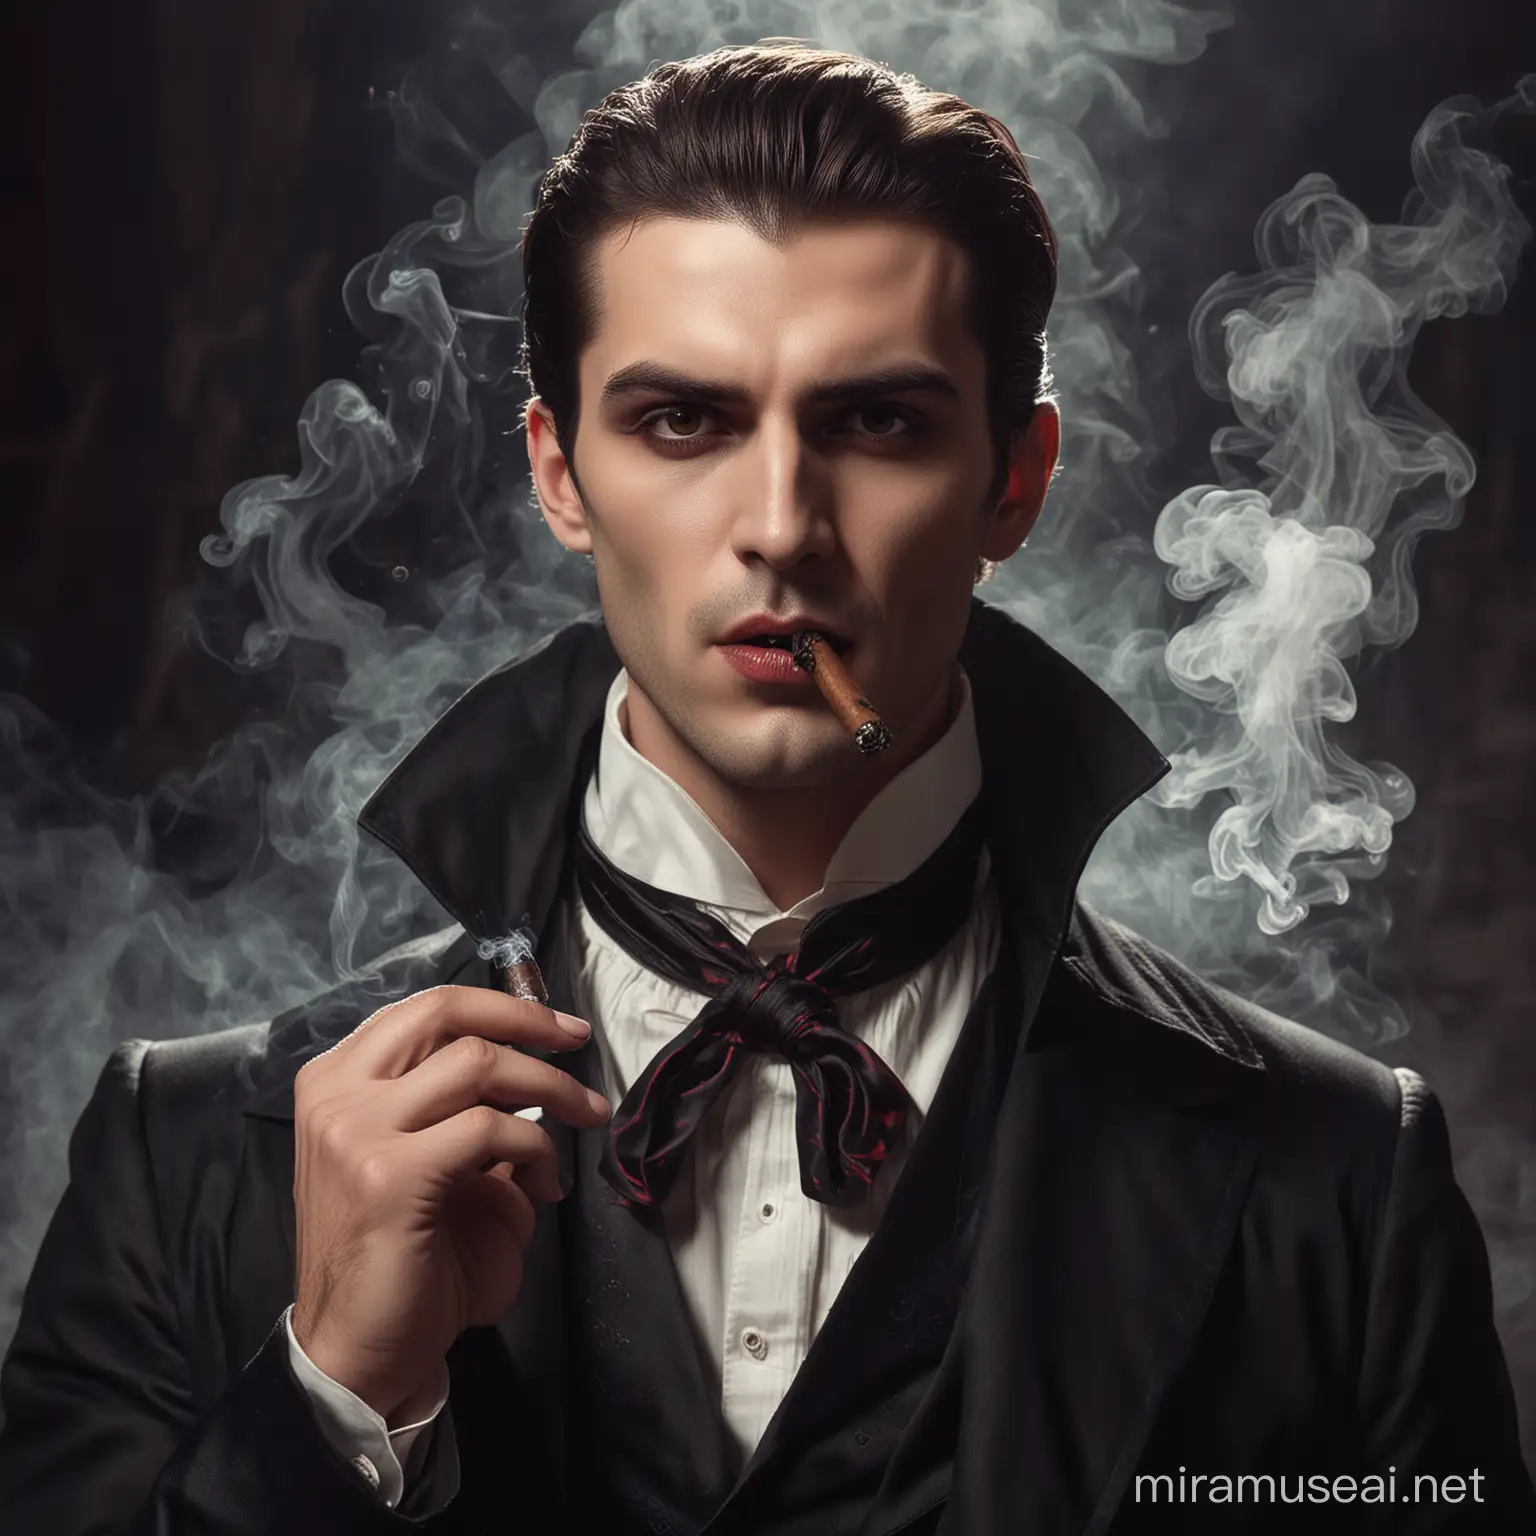 handsome vampire smoking cigar
